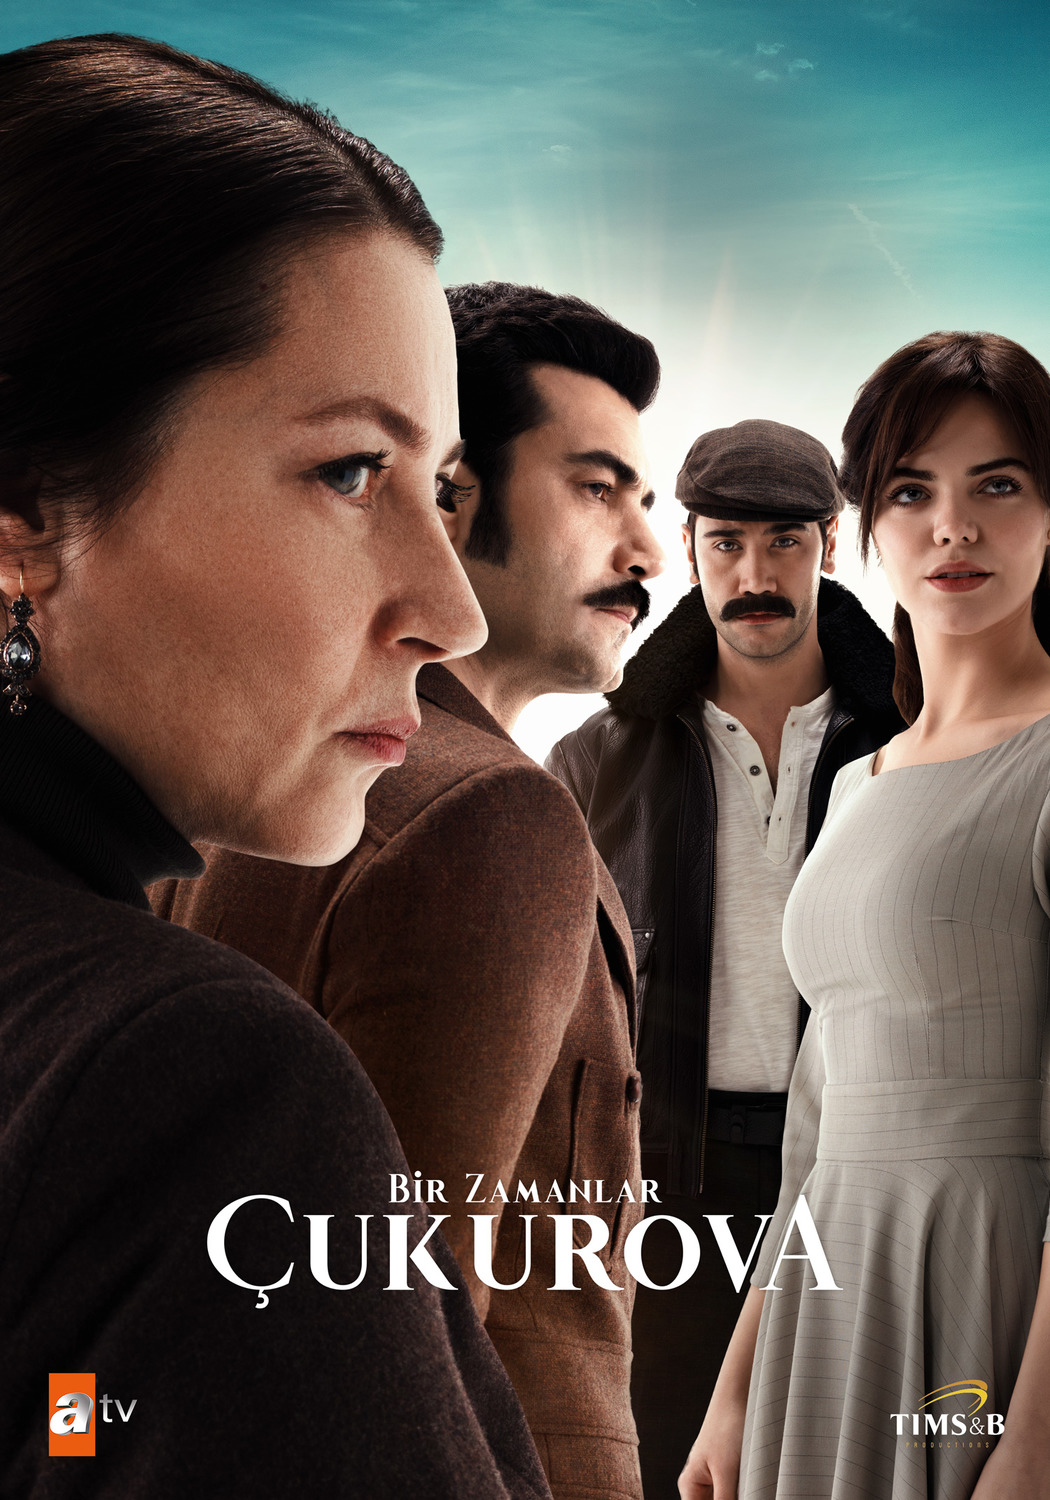 Extra Large TV Poster Image for Bir zamanlar Çukurova (#7 of 12)